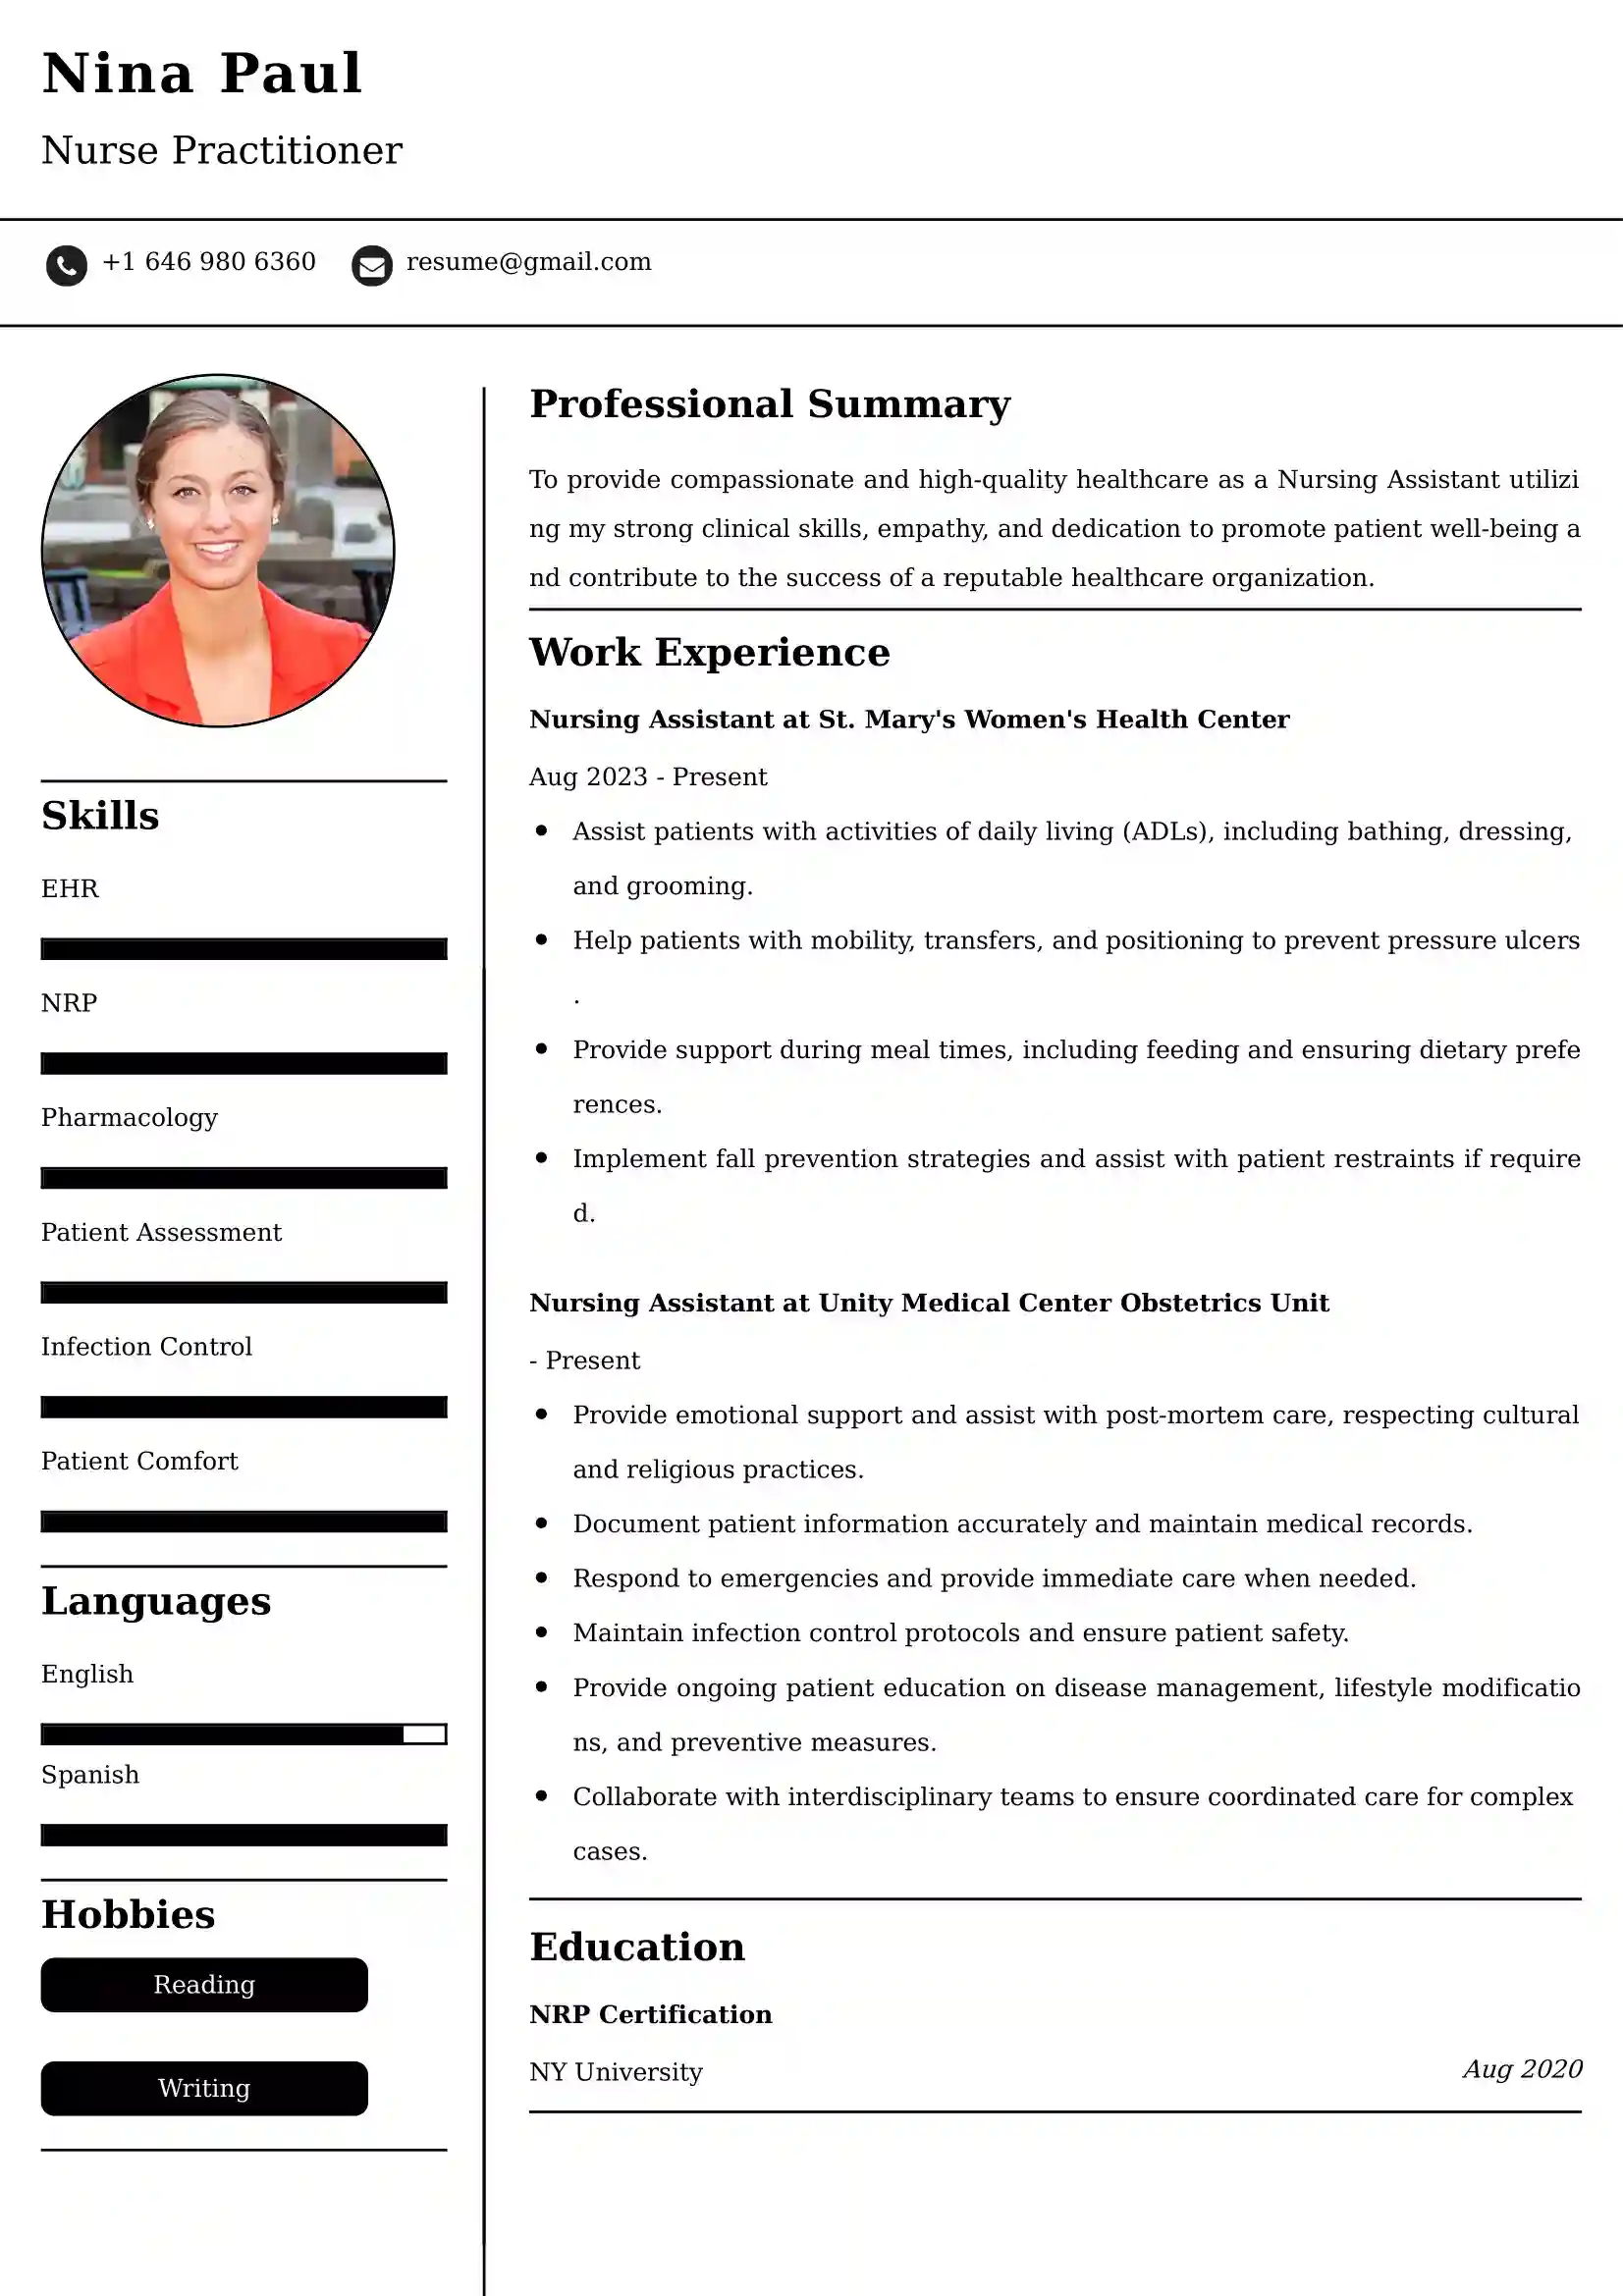 Nursing Assistant CV Examples - US Format